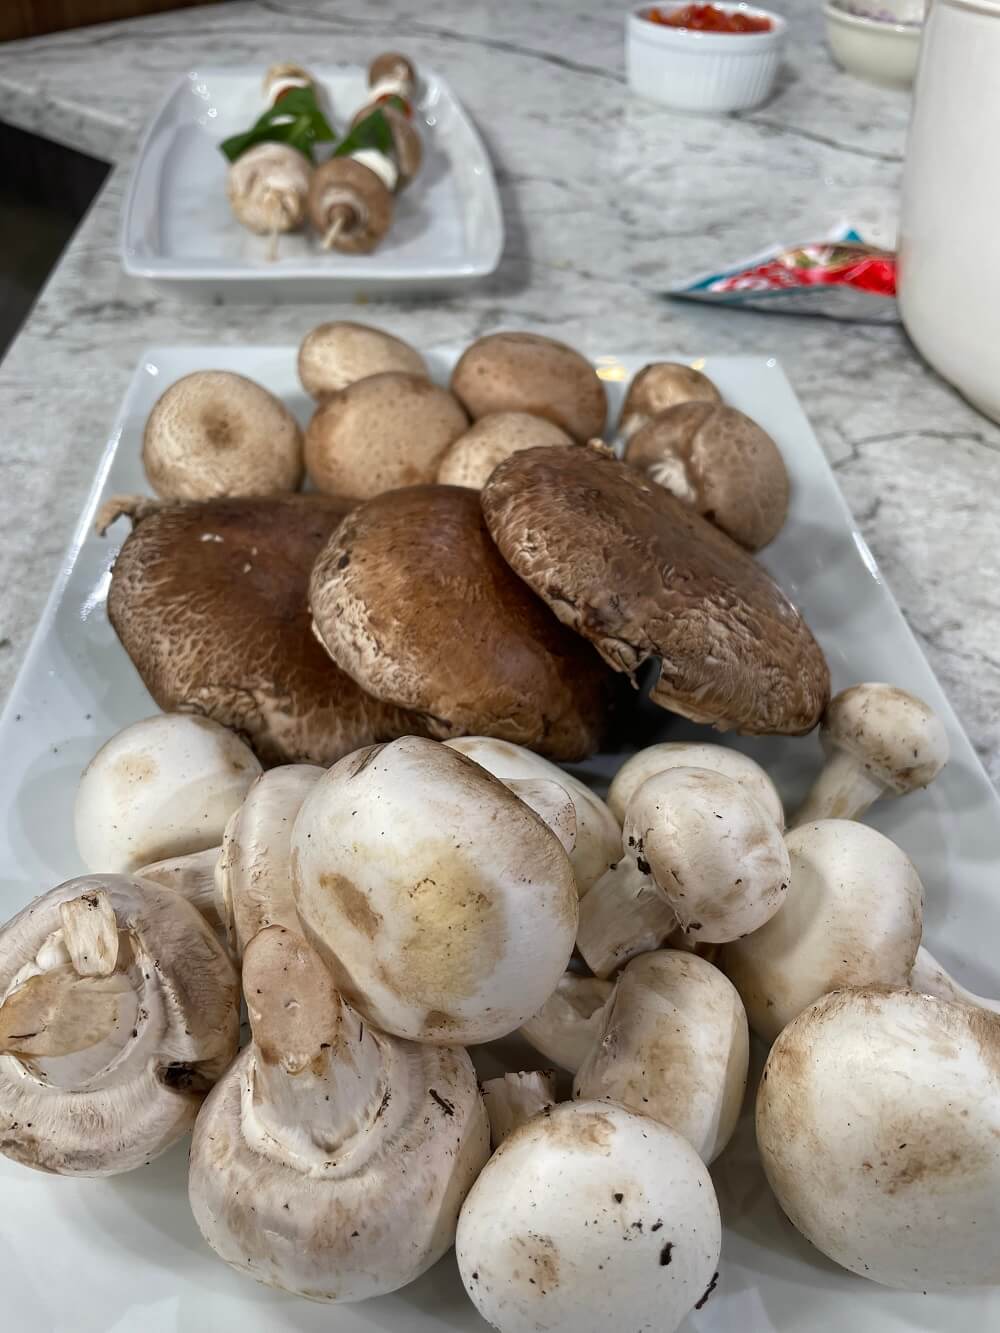 In Style This Season: Mushrooms!